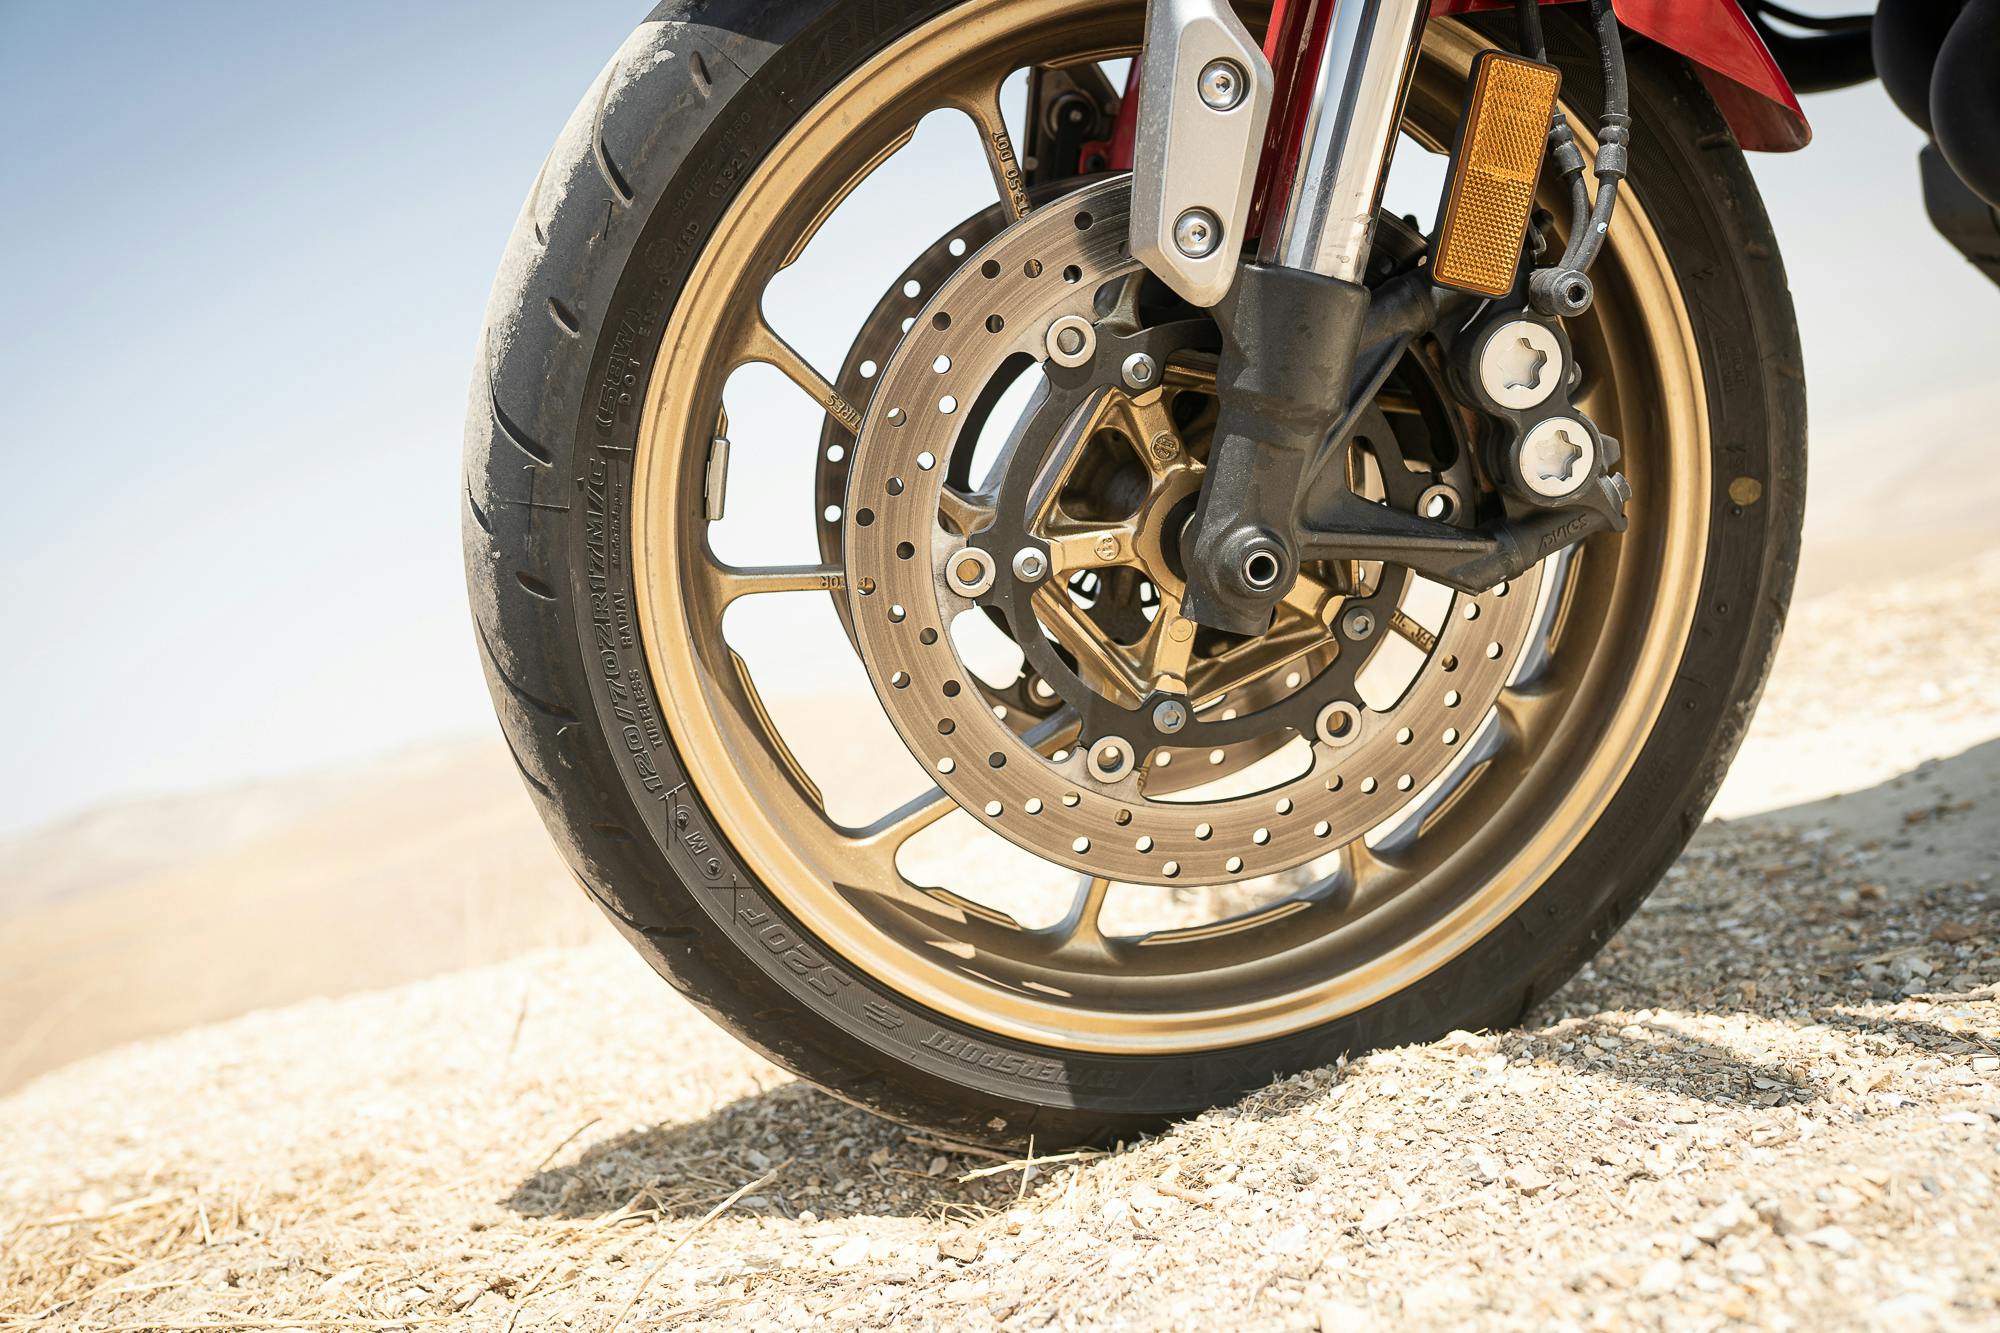 Yamaha XSR900 front wheel brake tire closeup